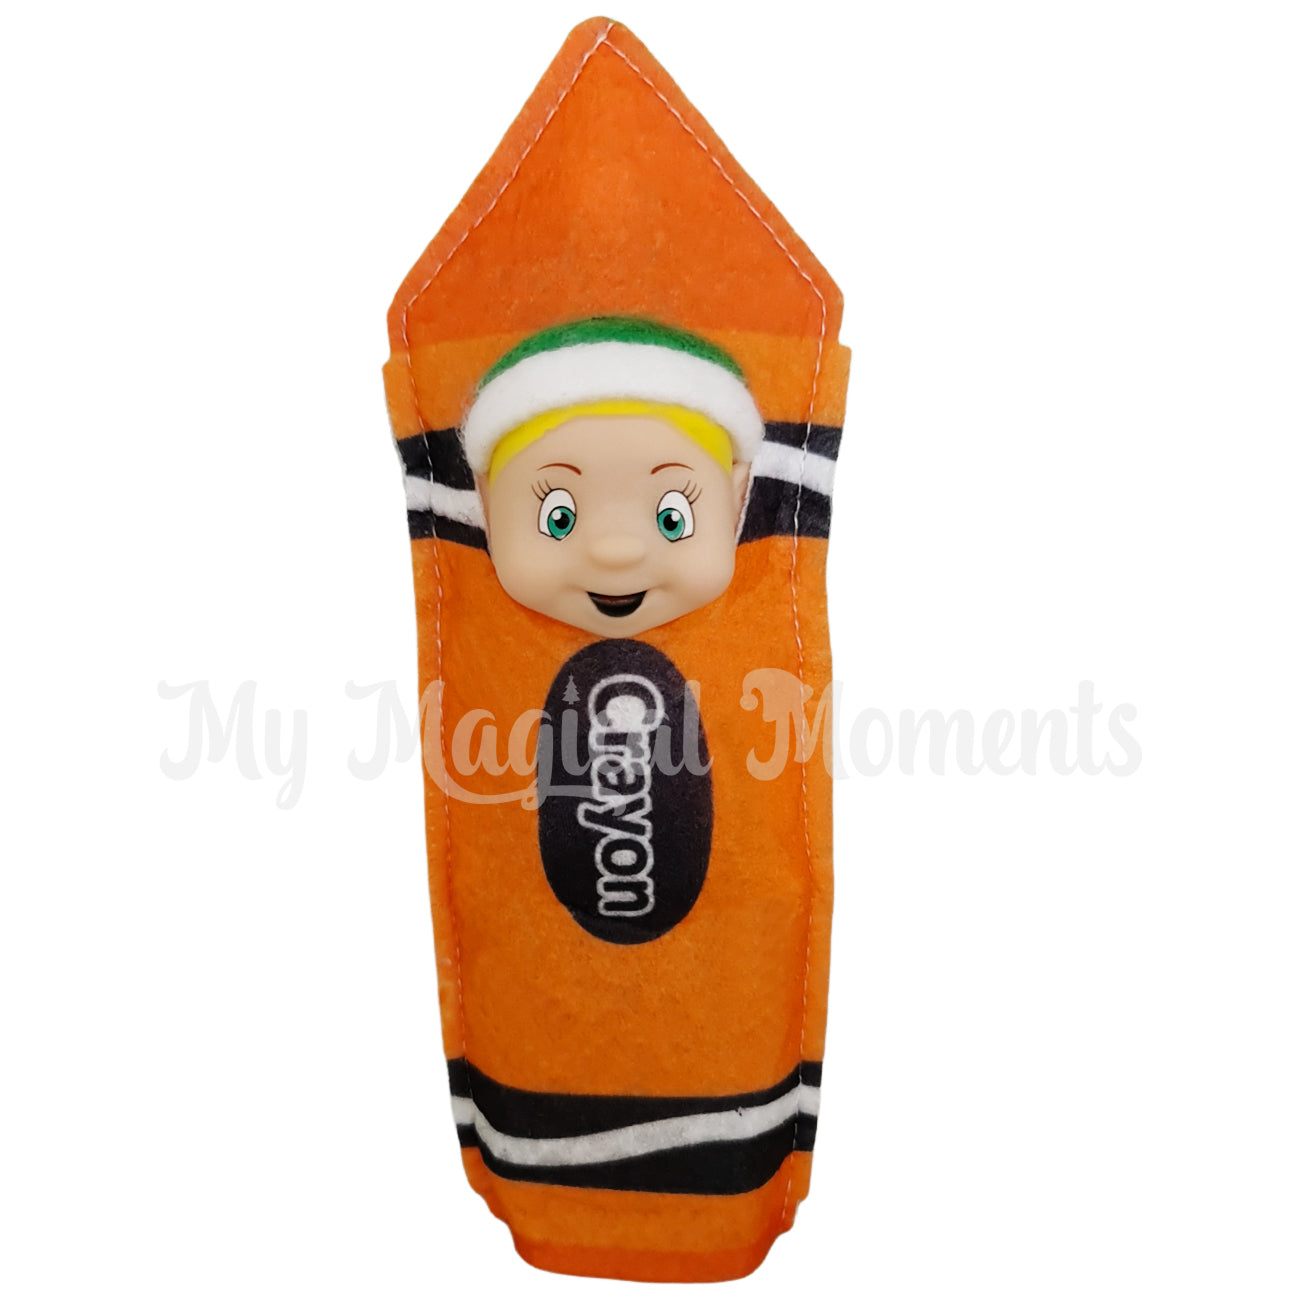 Blonde Hair elf dressed as an orange crayon outfit